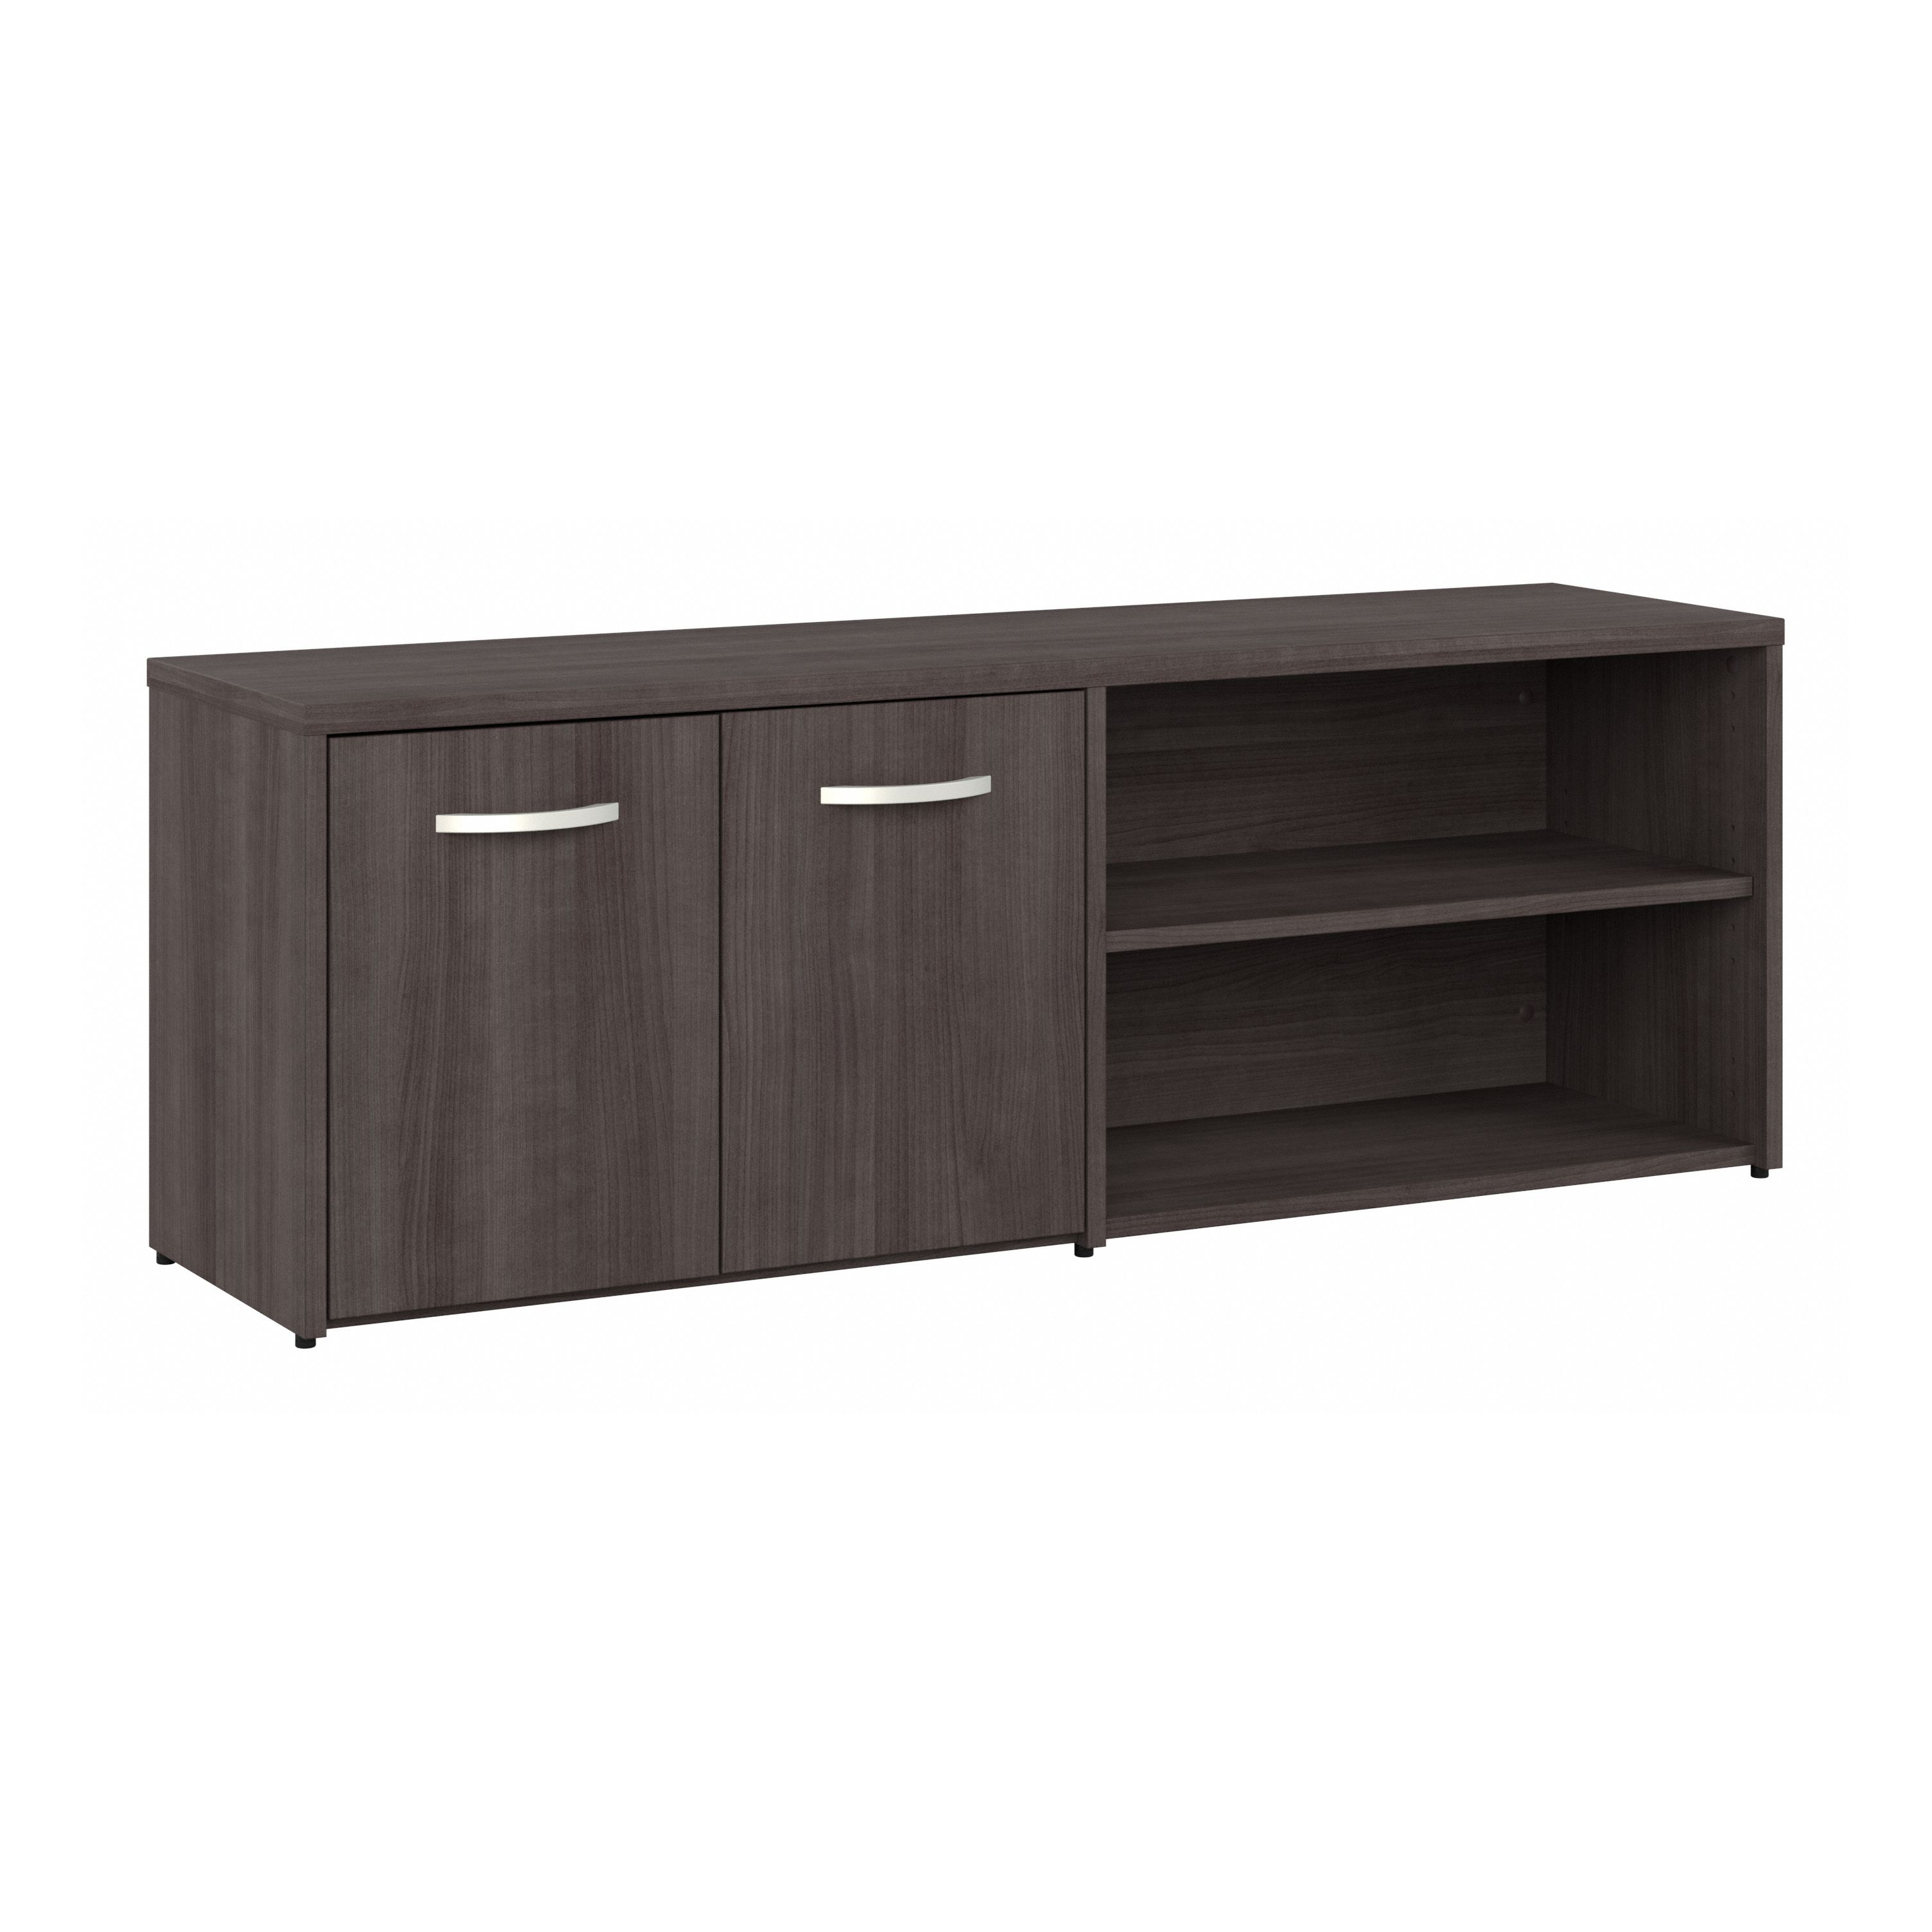 Shop Bush Business Furniture Studio C Low Storage Cabinet with Doors and Shelves 02 SCS160SG #color_storm gray